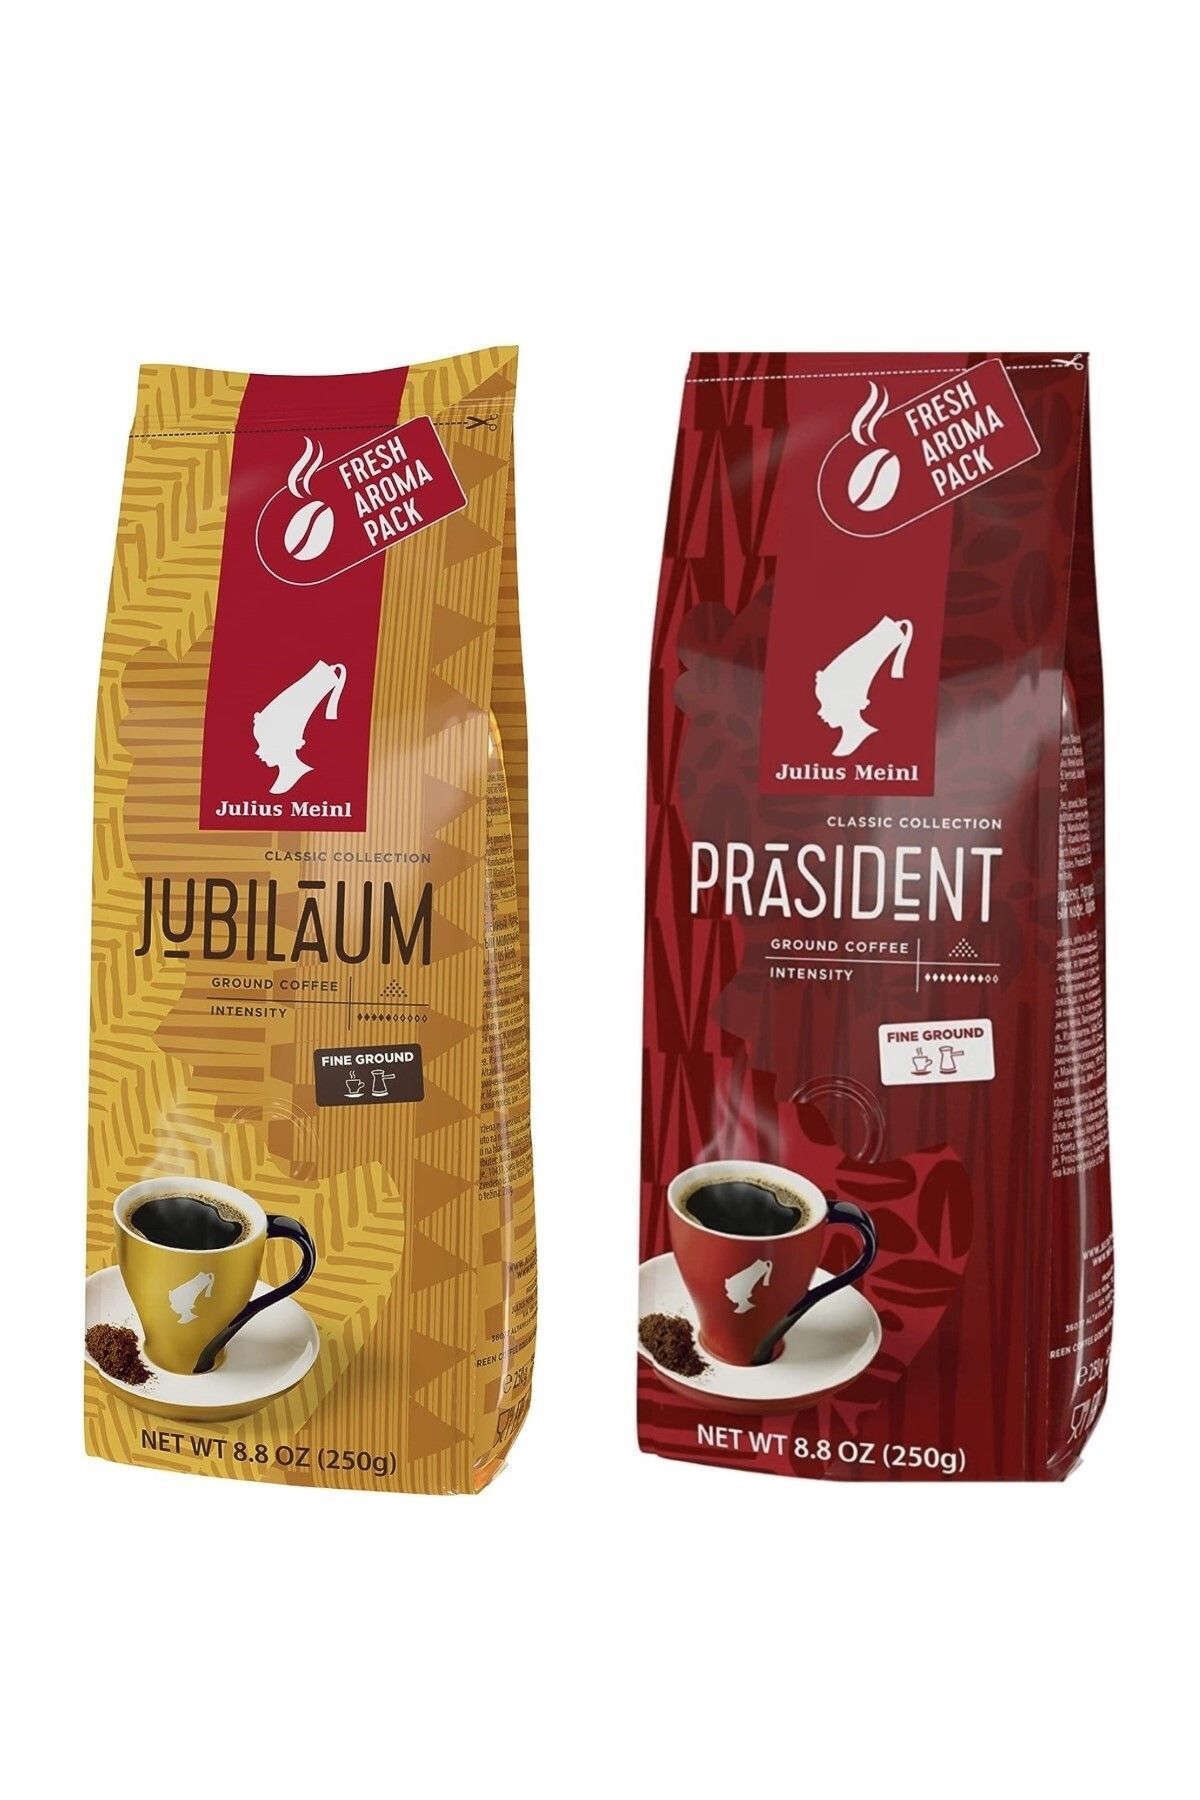 Julius Meinl Jubilaum ve Präsident Blend Öğütülmüş Filtre Kahve, 2 x 250 gr.